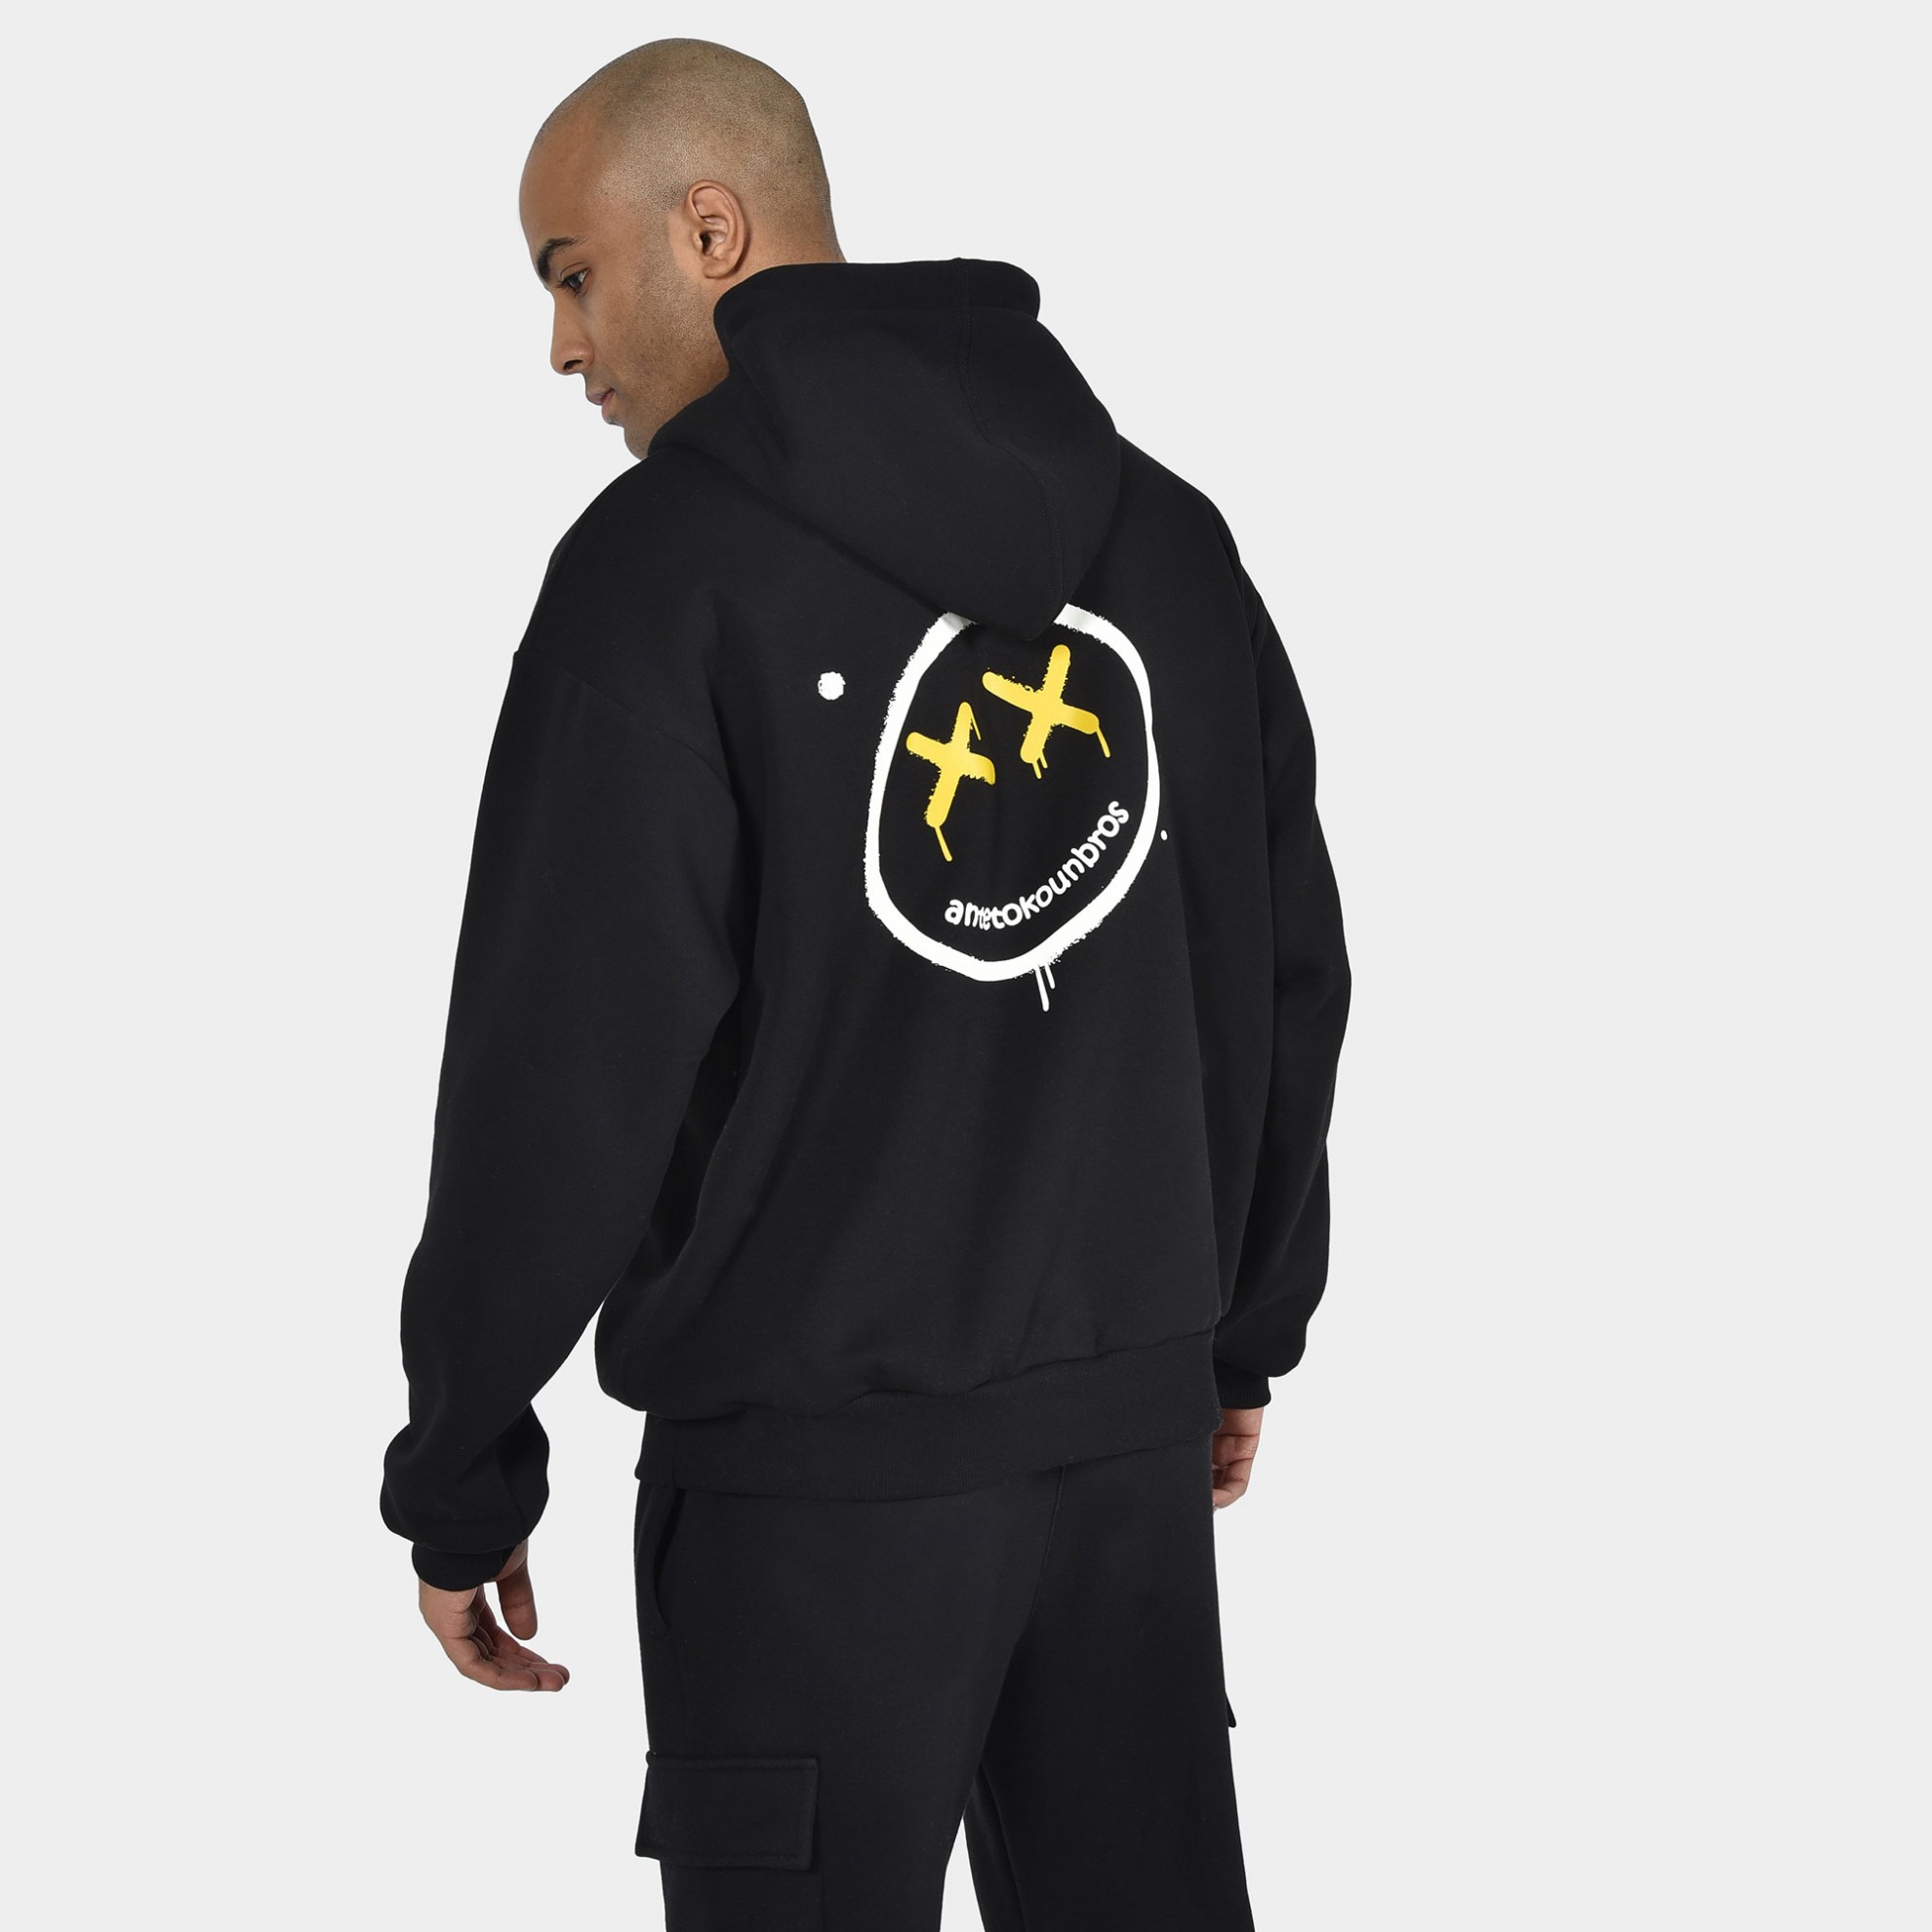 Men's Hoodie in Black with Smiley Logo | ANTETOKOUNBROS